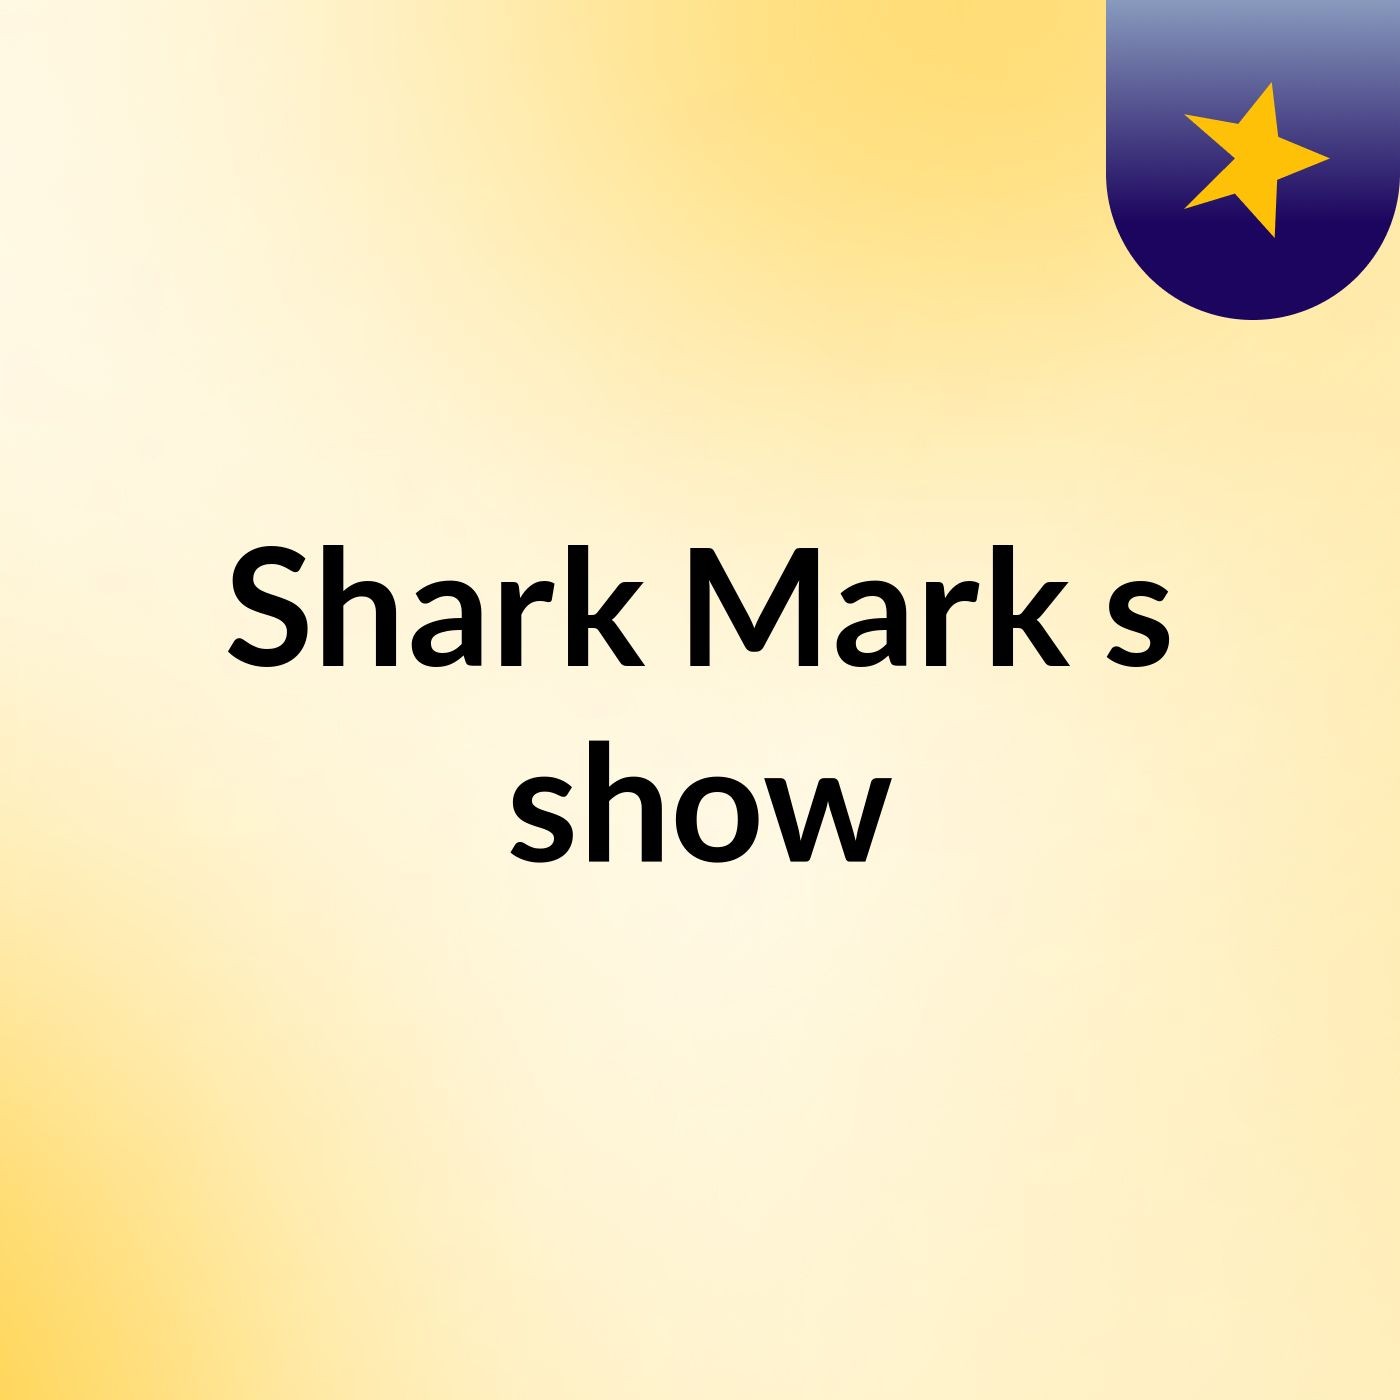 Shark Mark's show